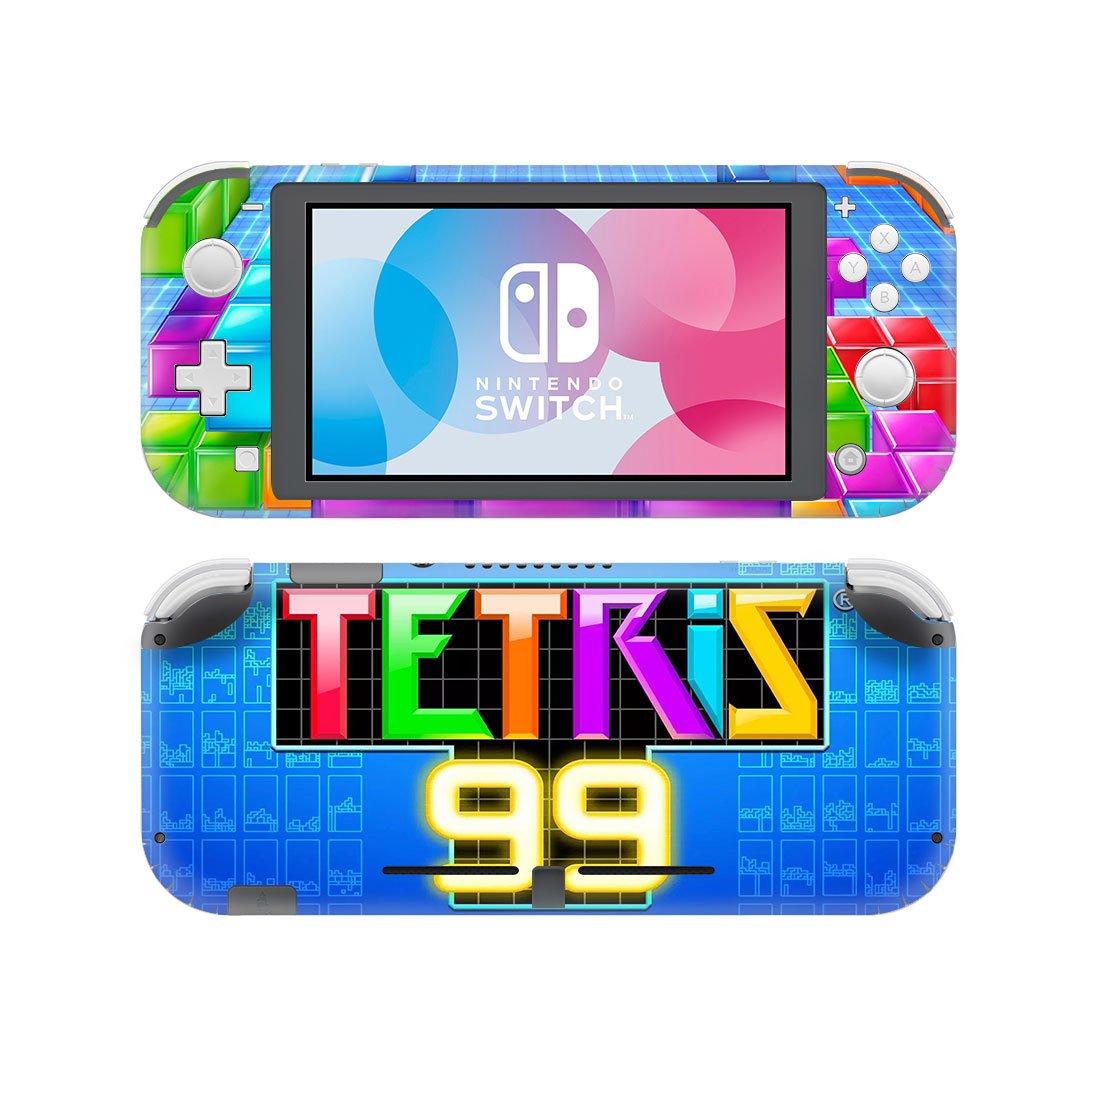 tetris nes switch